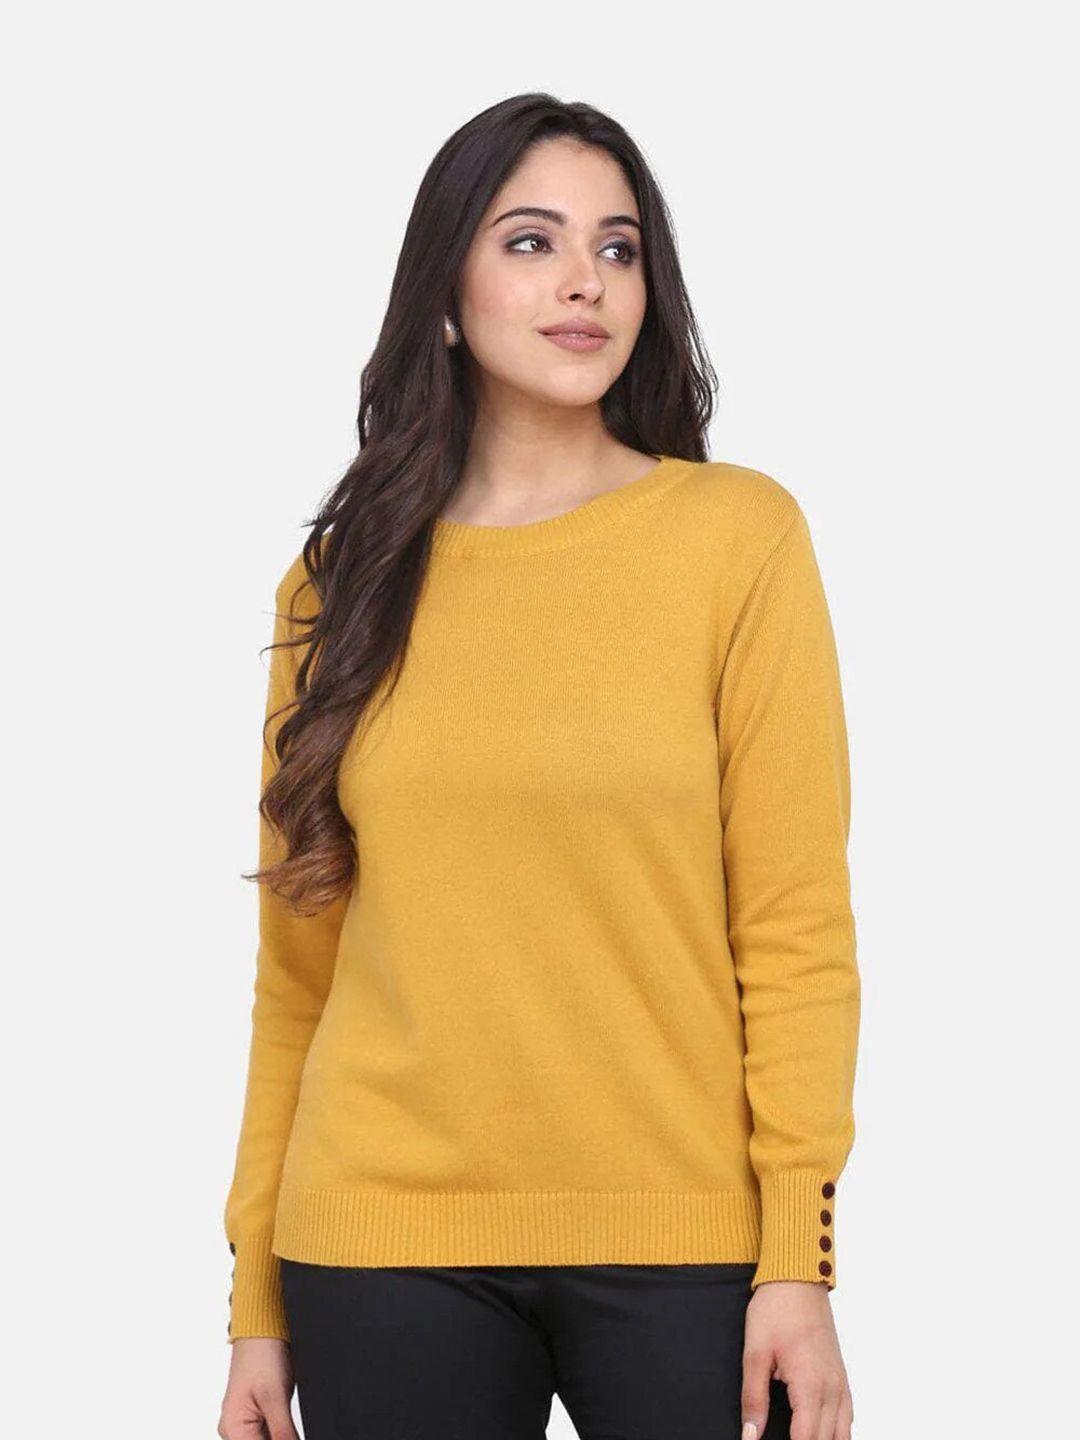 powersutra women yellow solid sweater